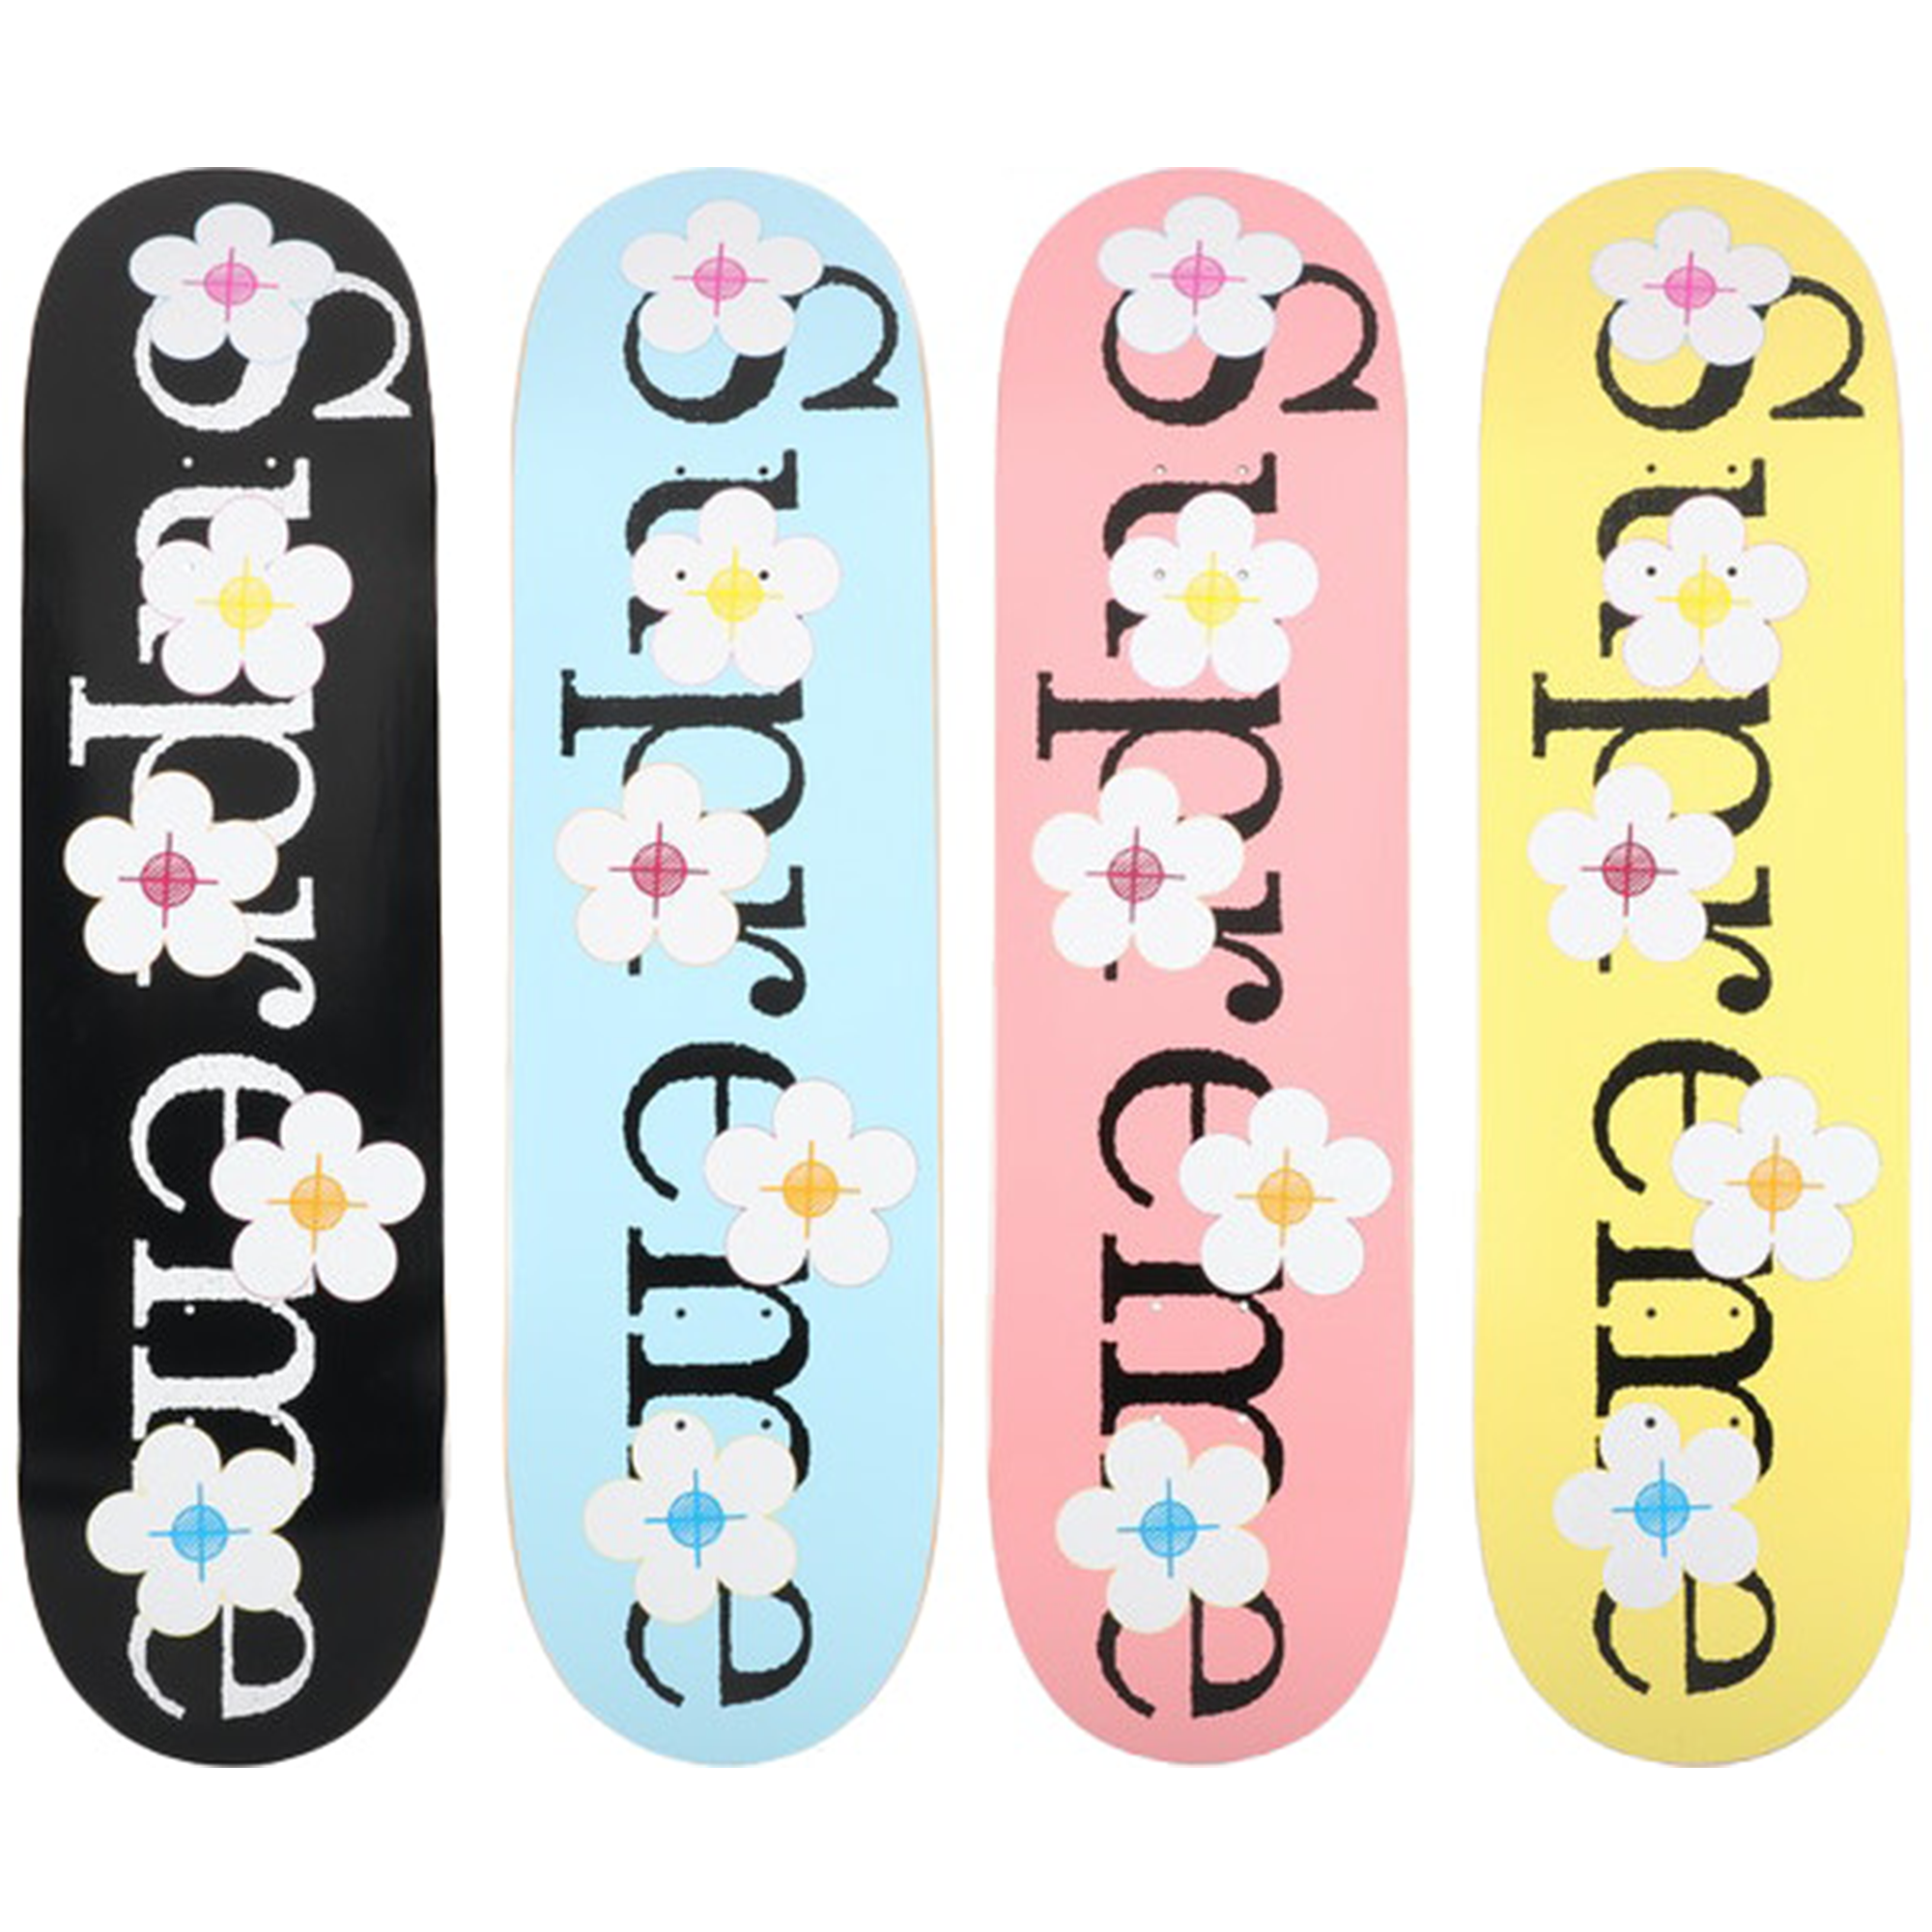 Supreme Flowers Skateboard Deck Black/Blue/Pink/Yellow Set PLUS